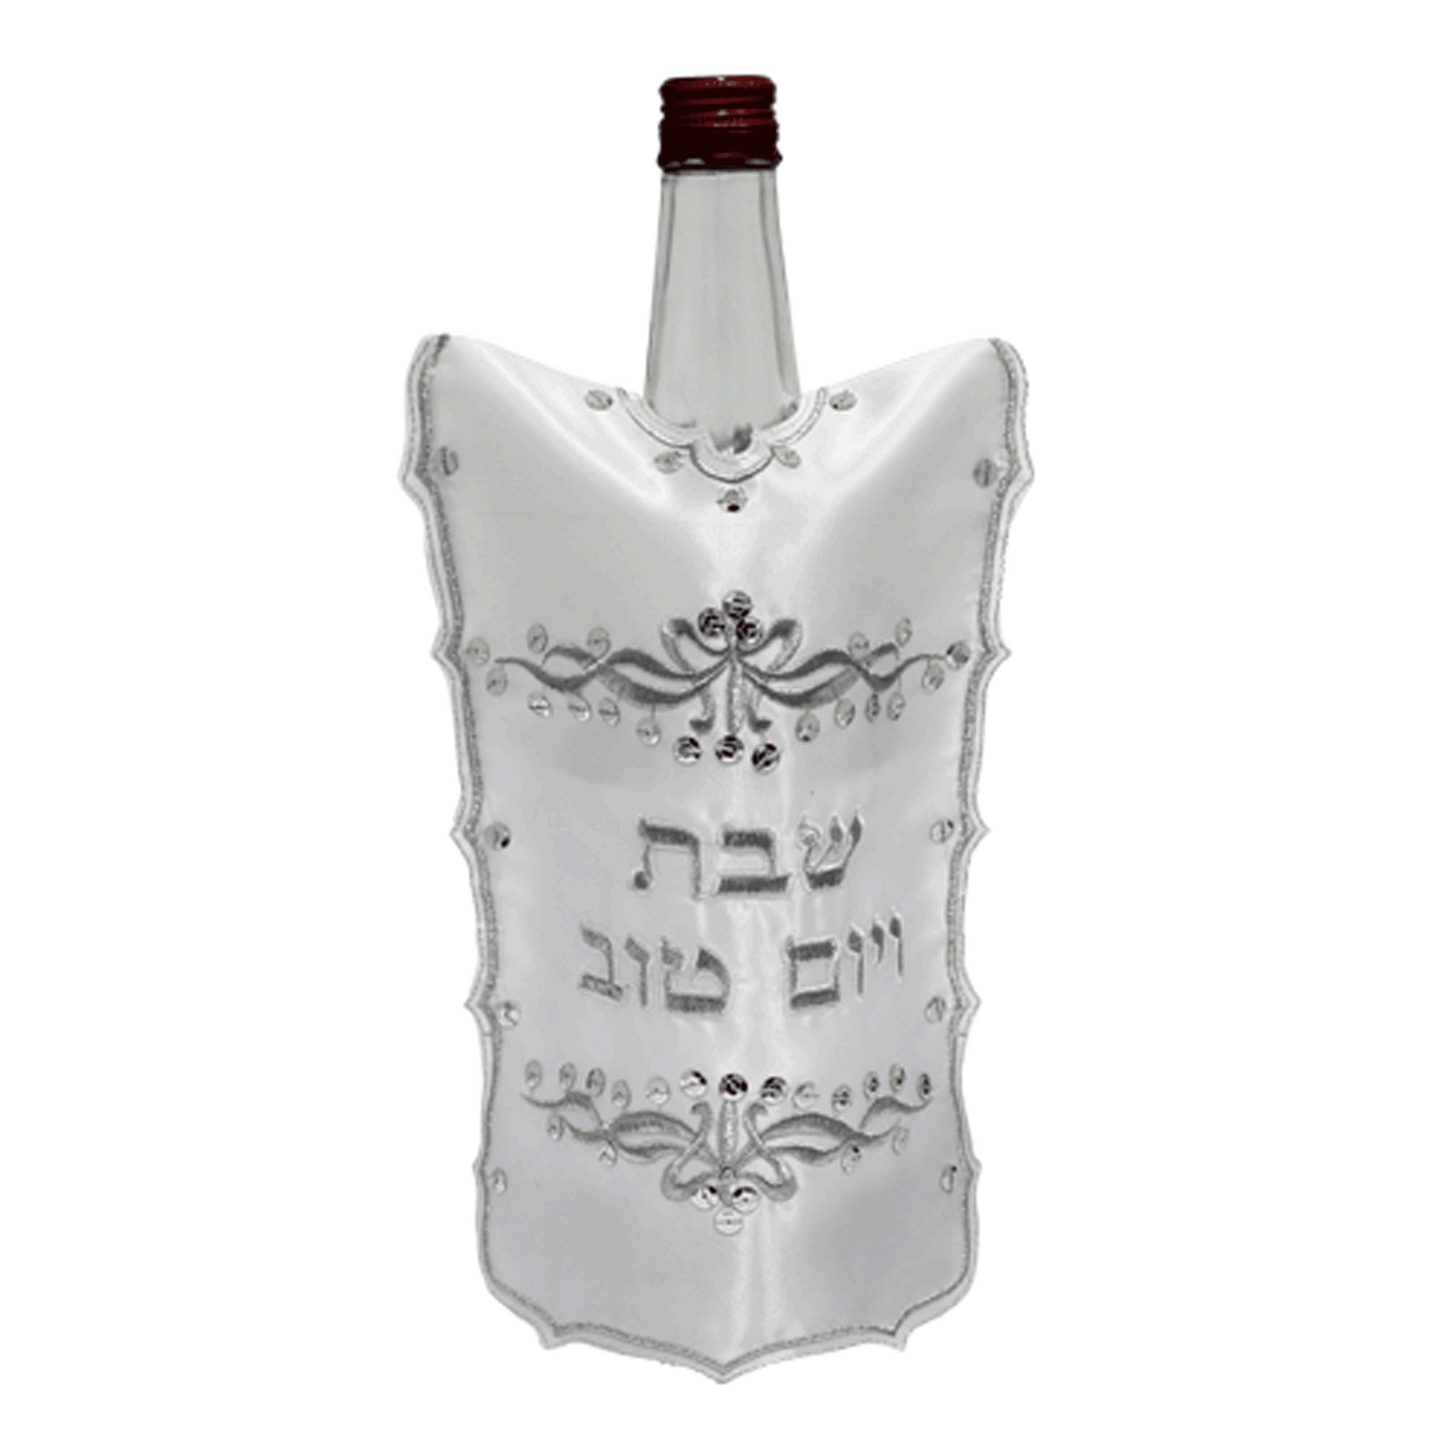 Shabbat Wine Bottle Cover - Embroidered